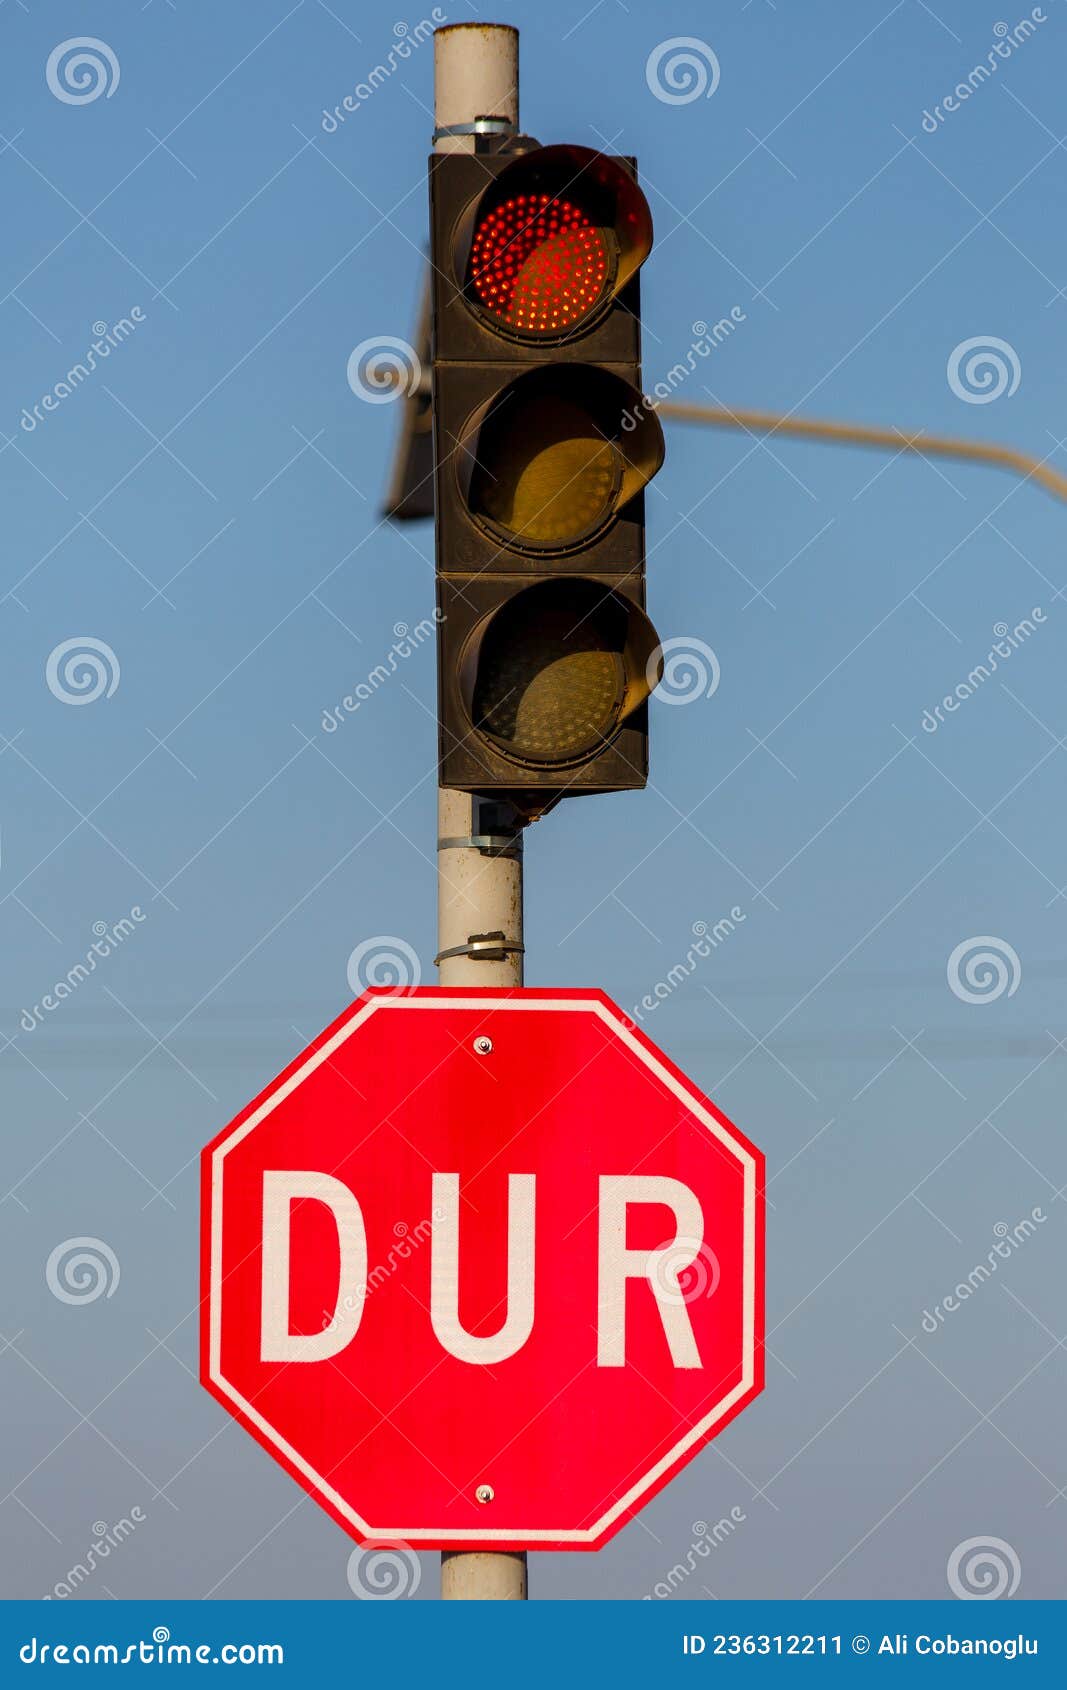 turkey traffic signs and traffic light. dur = stop